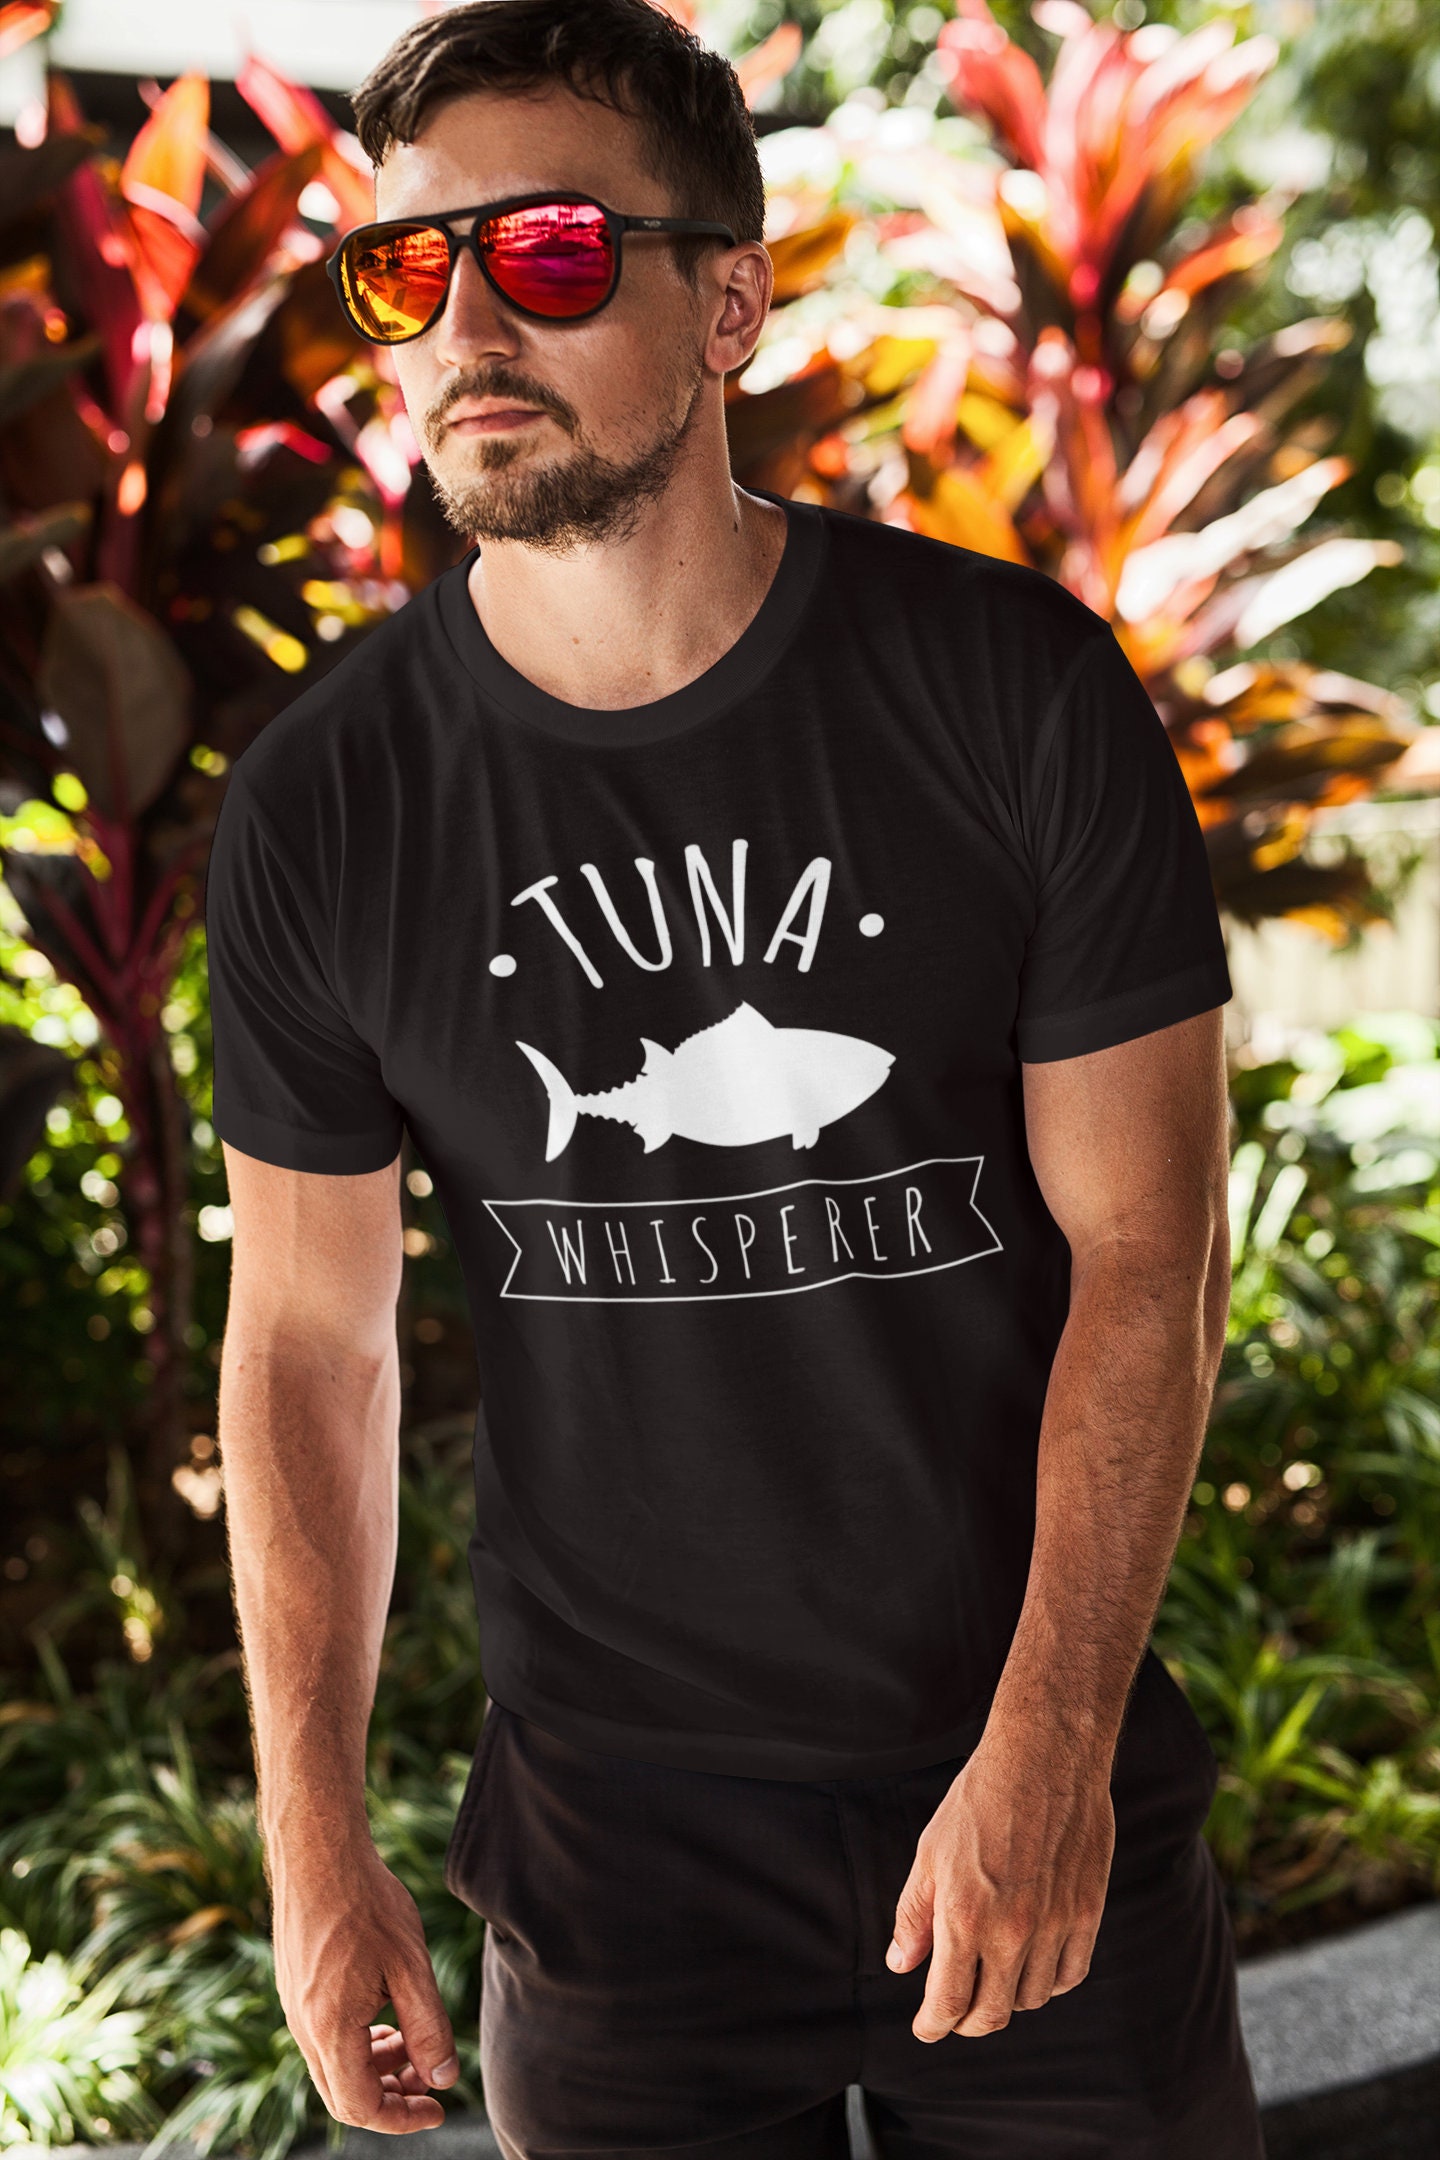 Tuna Whisperer Shirt / Tank Top / Hoodie / Tuna Shirt / Tuna